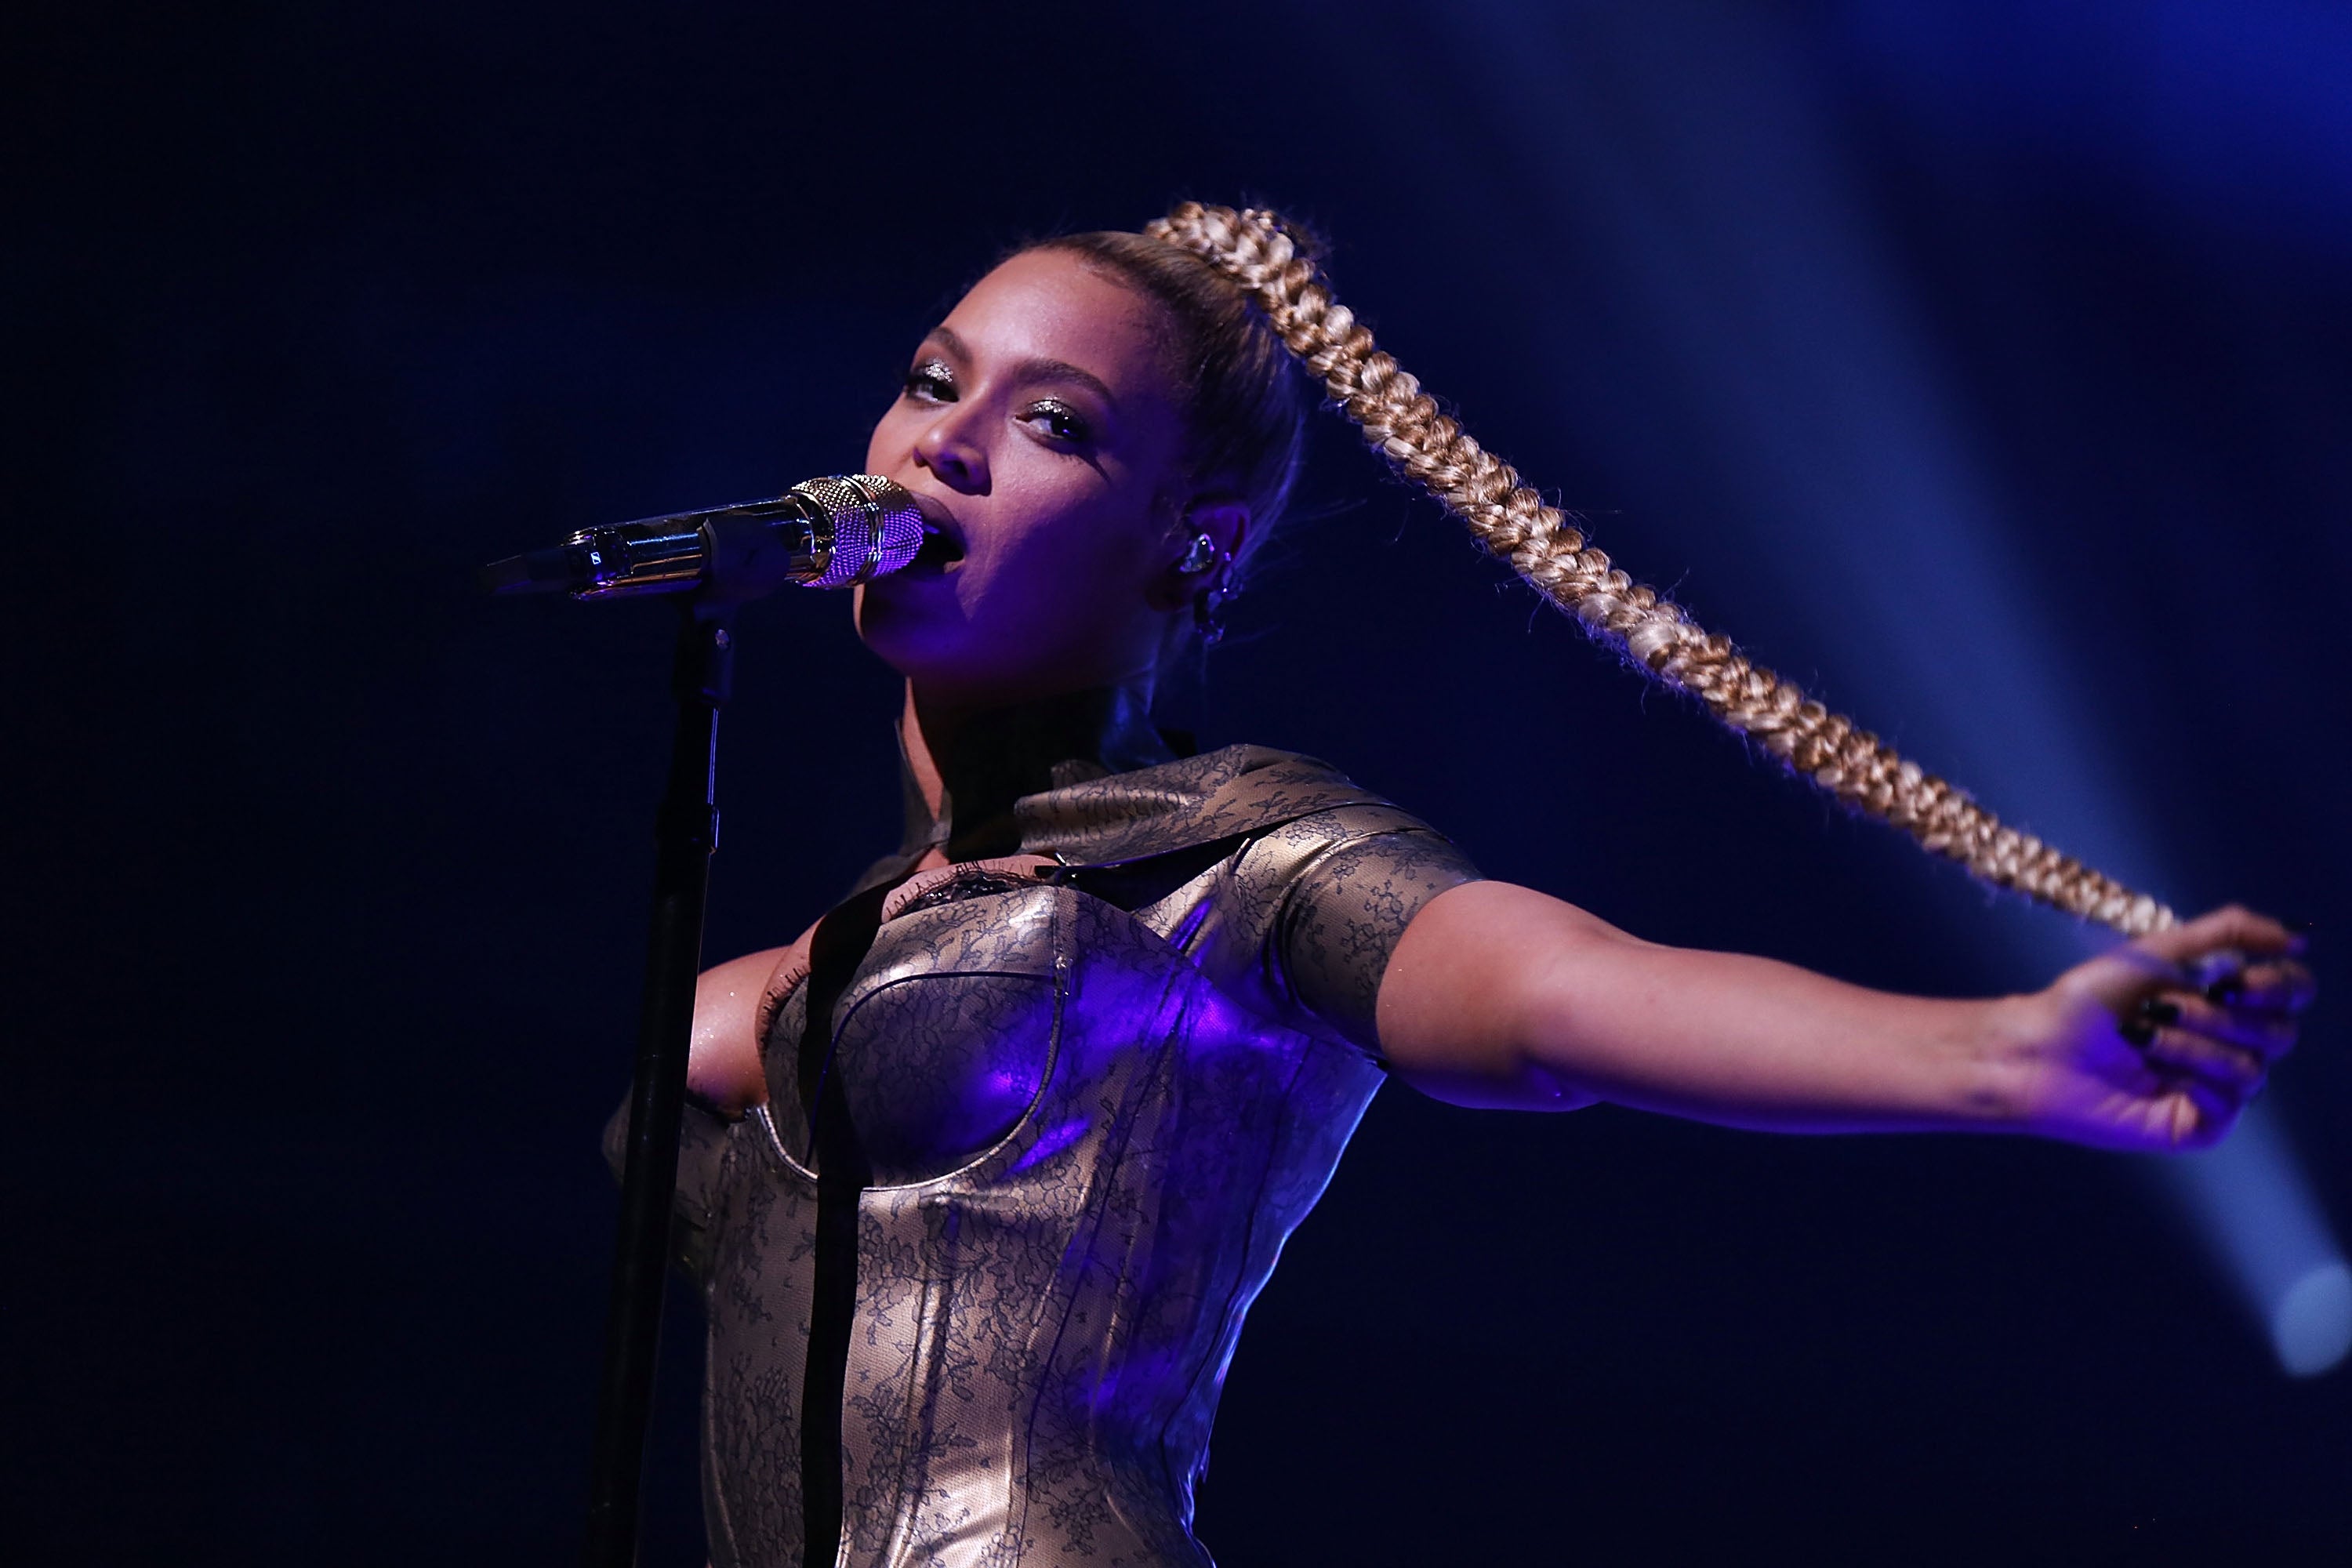 9 Must See Photos Of Beyoncé 's Epic Braid At Tidal x 1015
